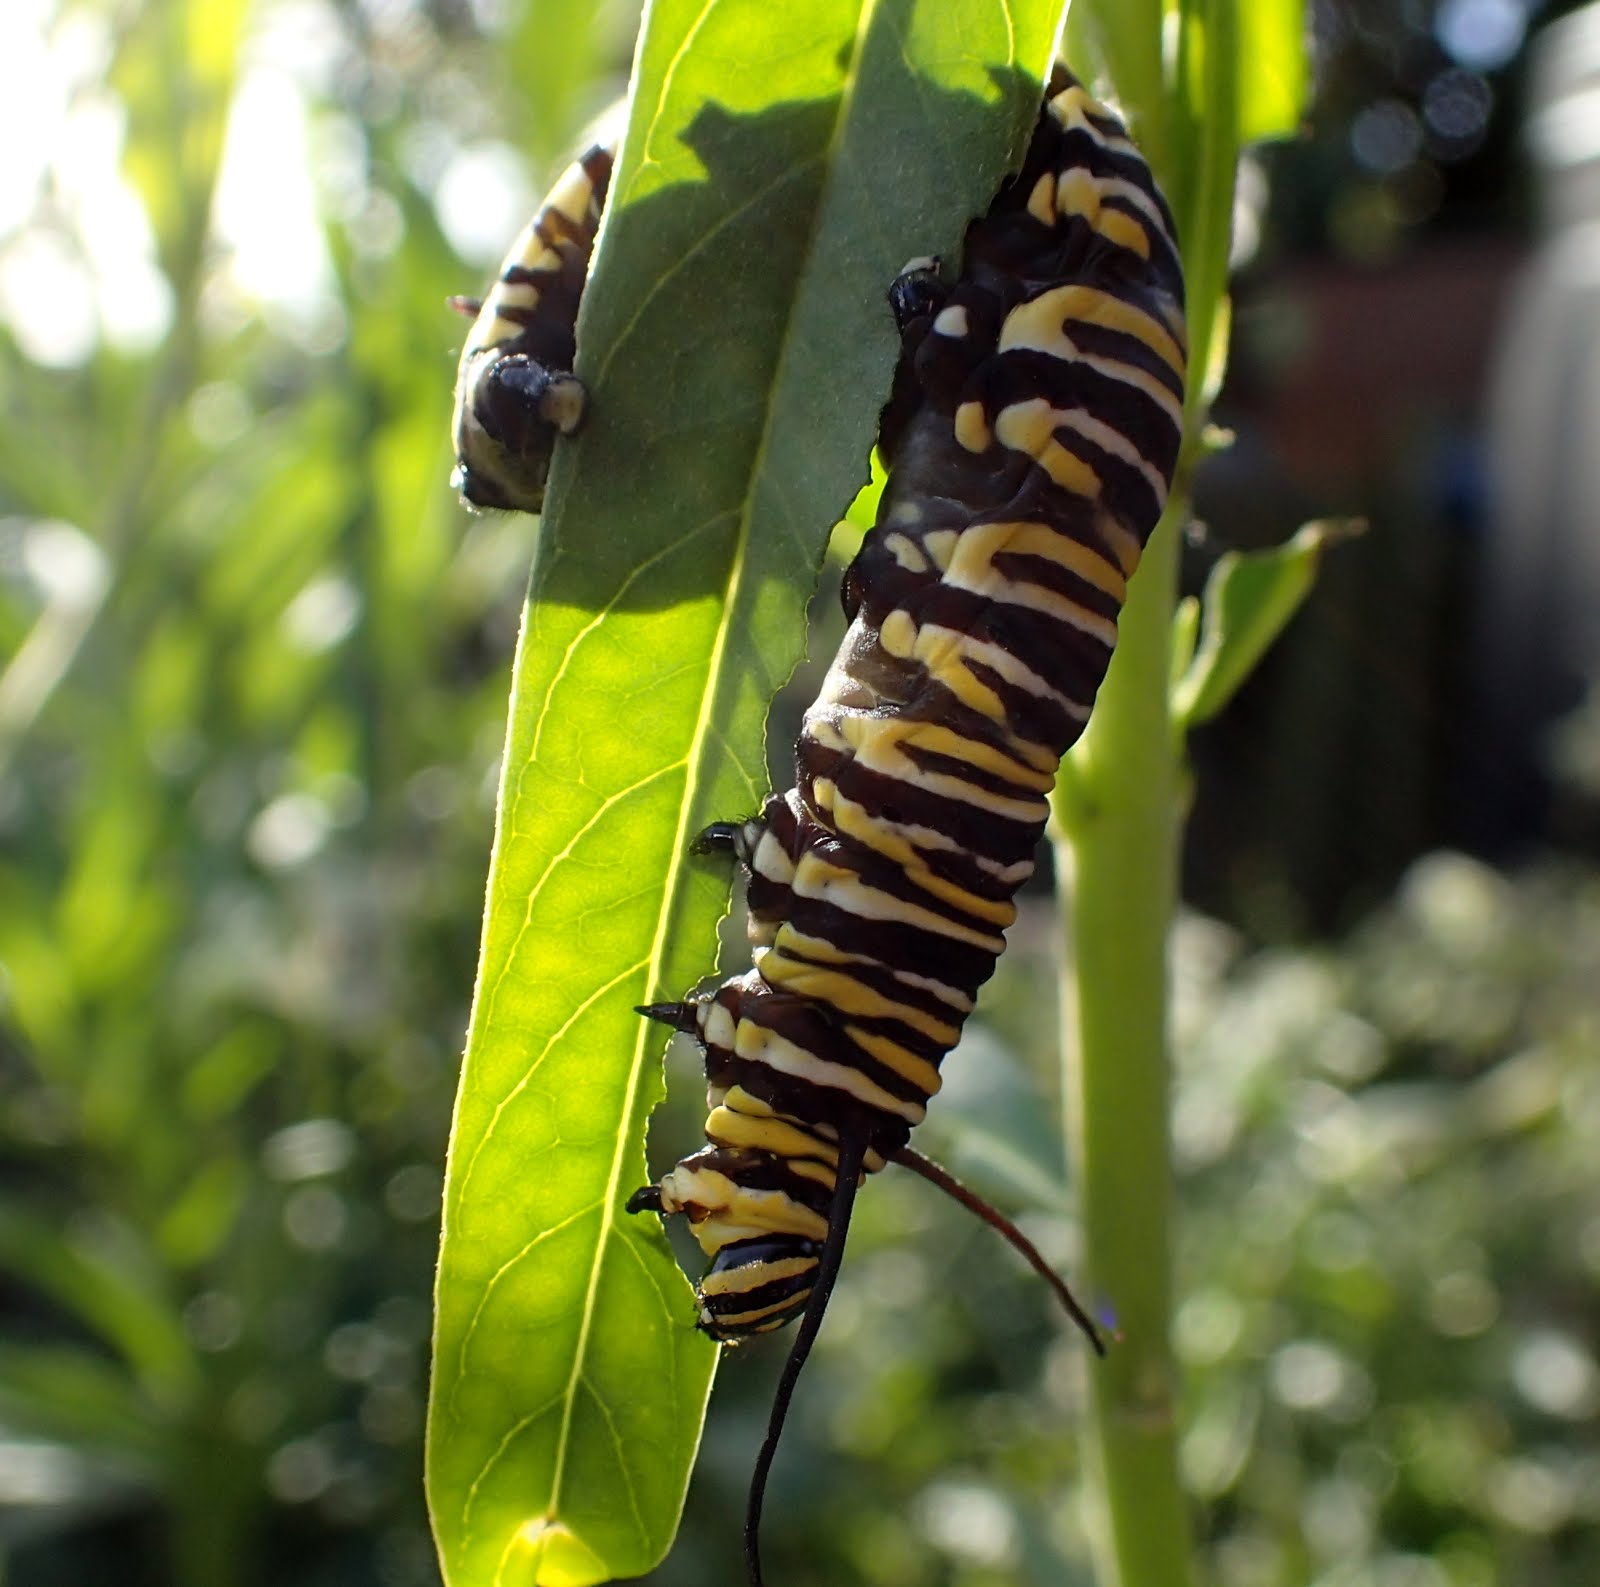 Monarch larvae